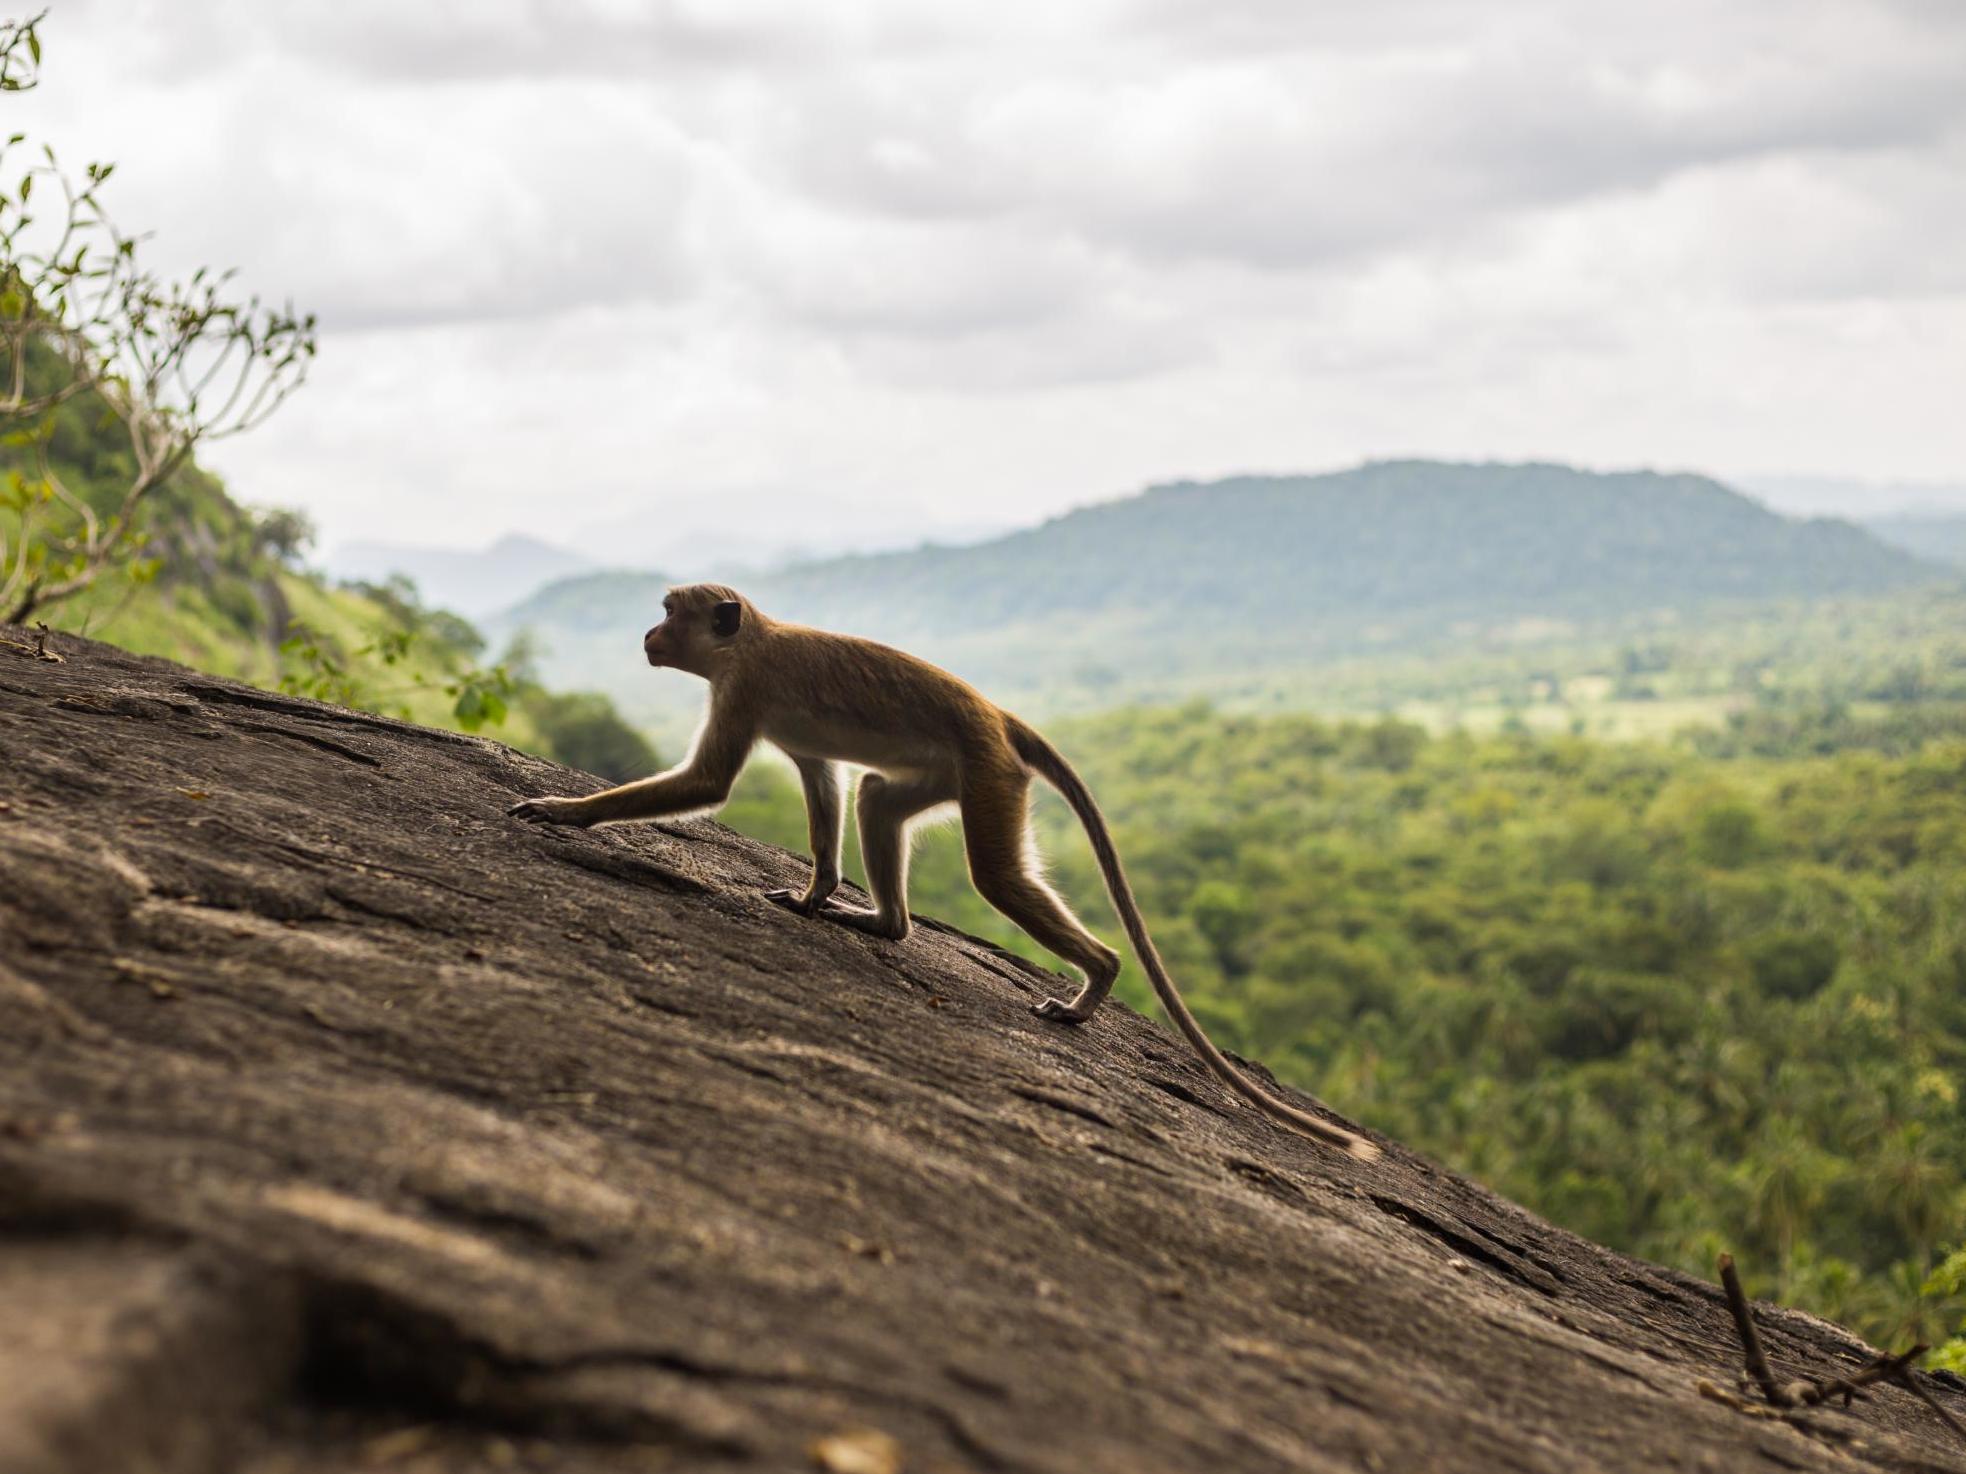 Обезьяна токи. Обезьяна с длинным хвостом Шри Ланка. Monkey Walking. Gifs a Climbing Monkey. A picture of a Climbing Monkey for Kids.